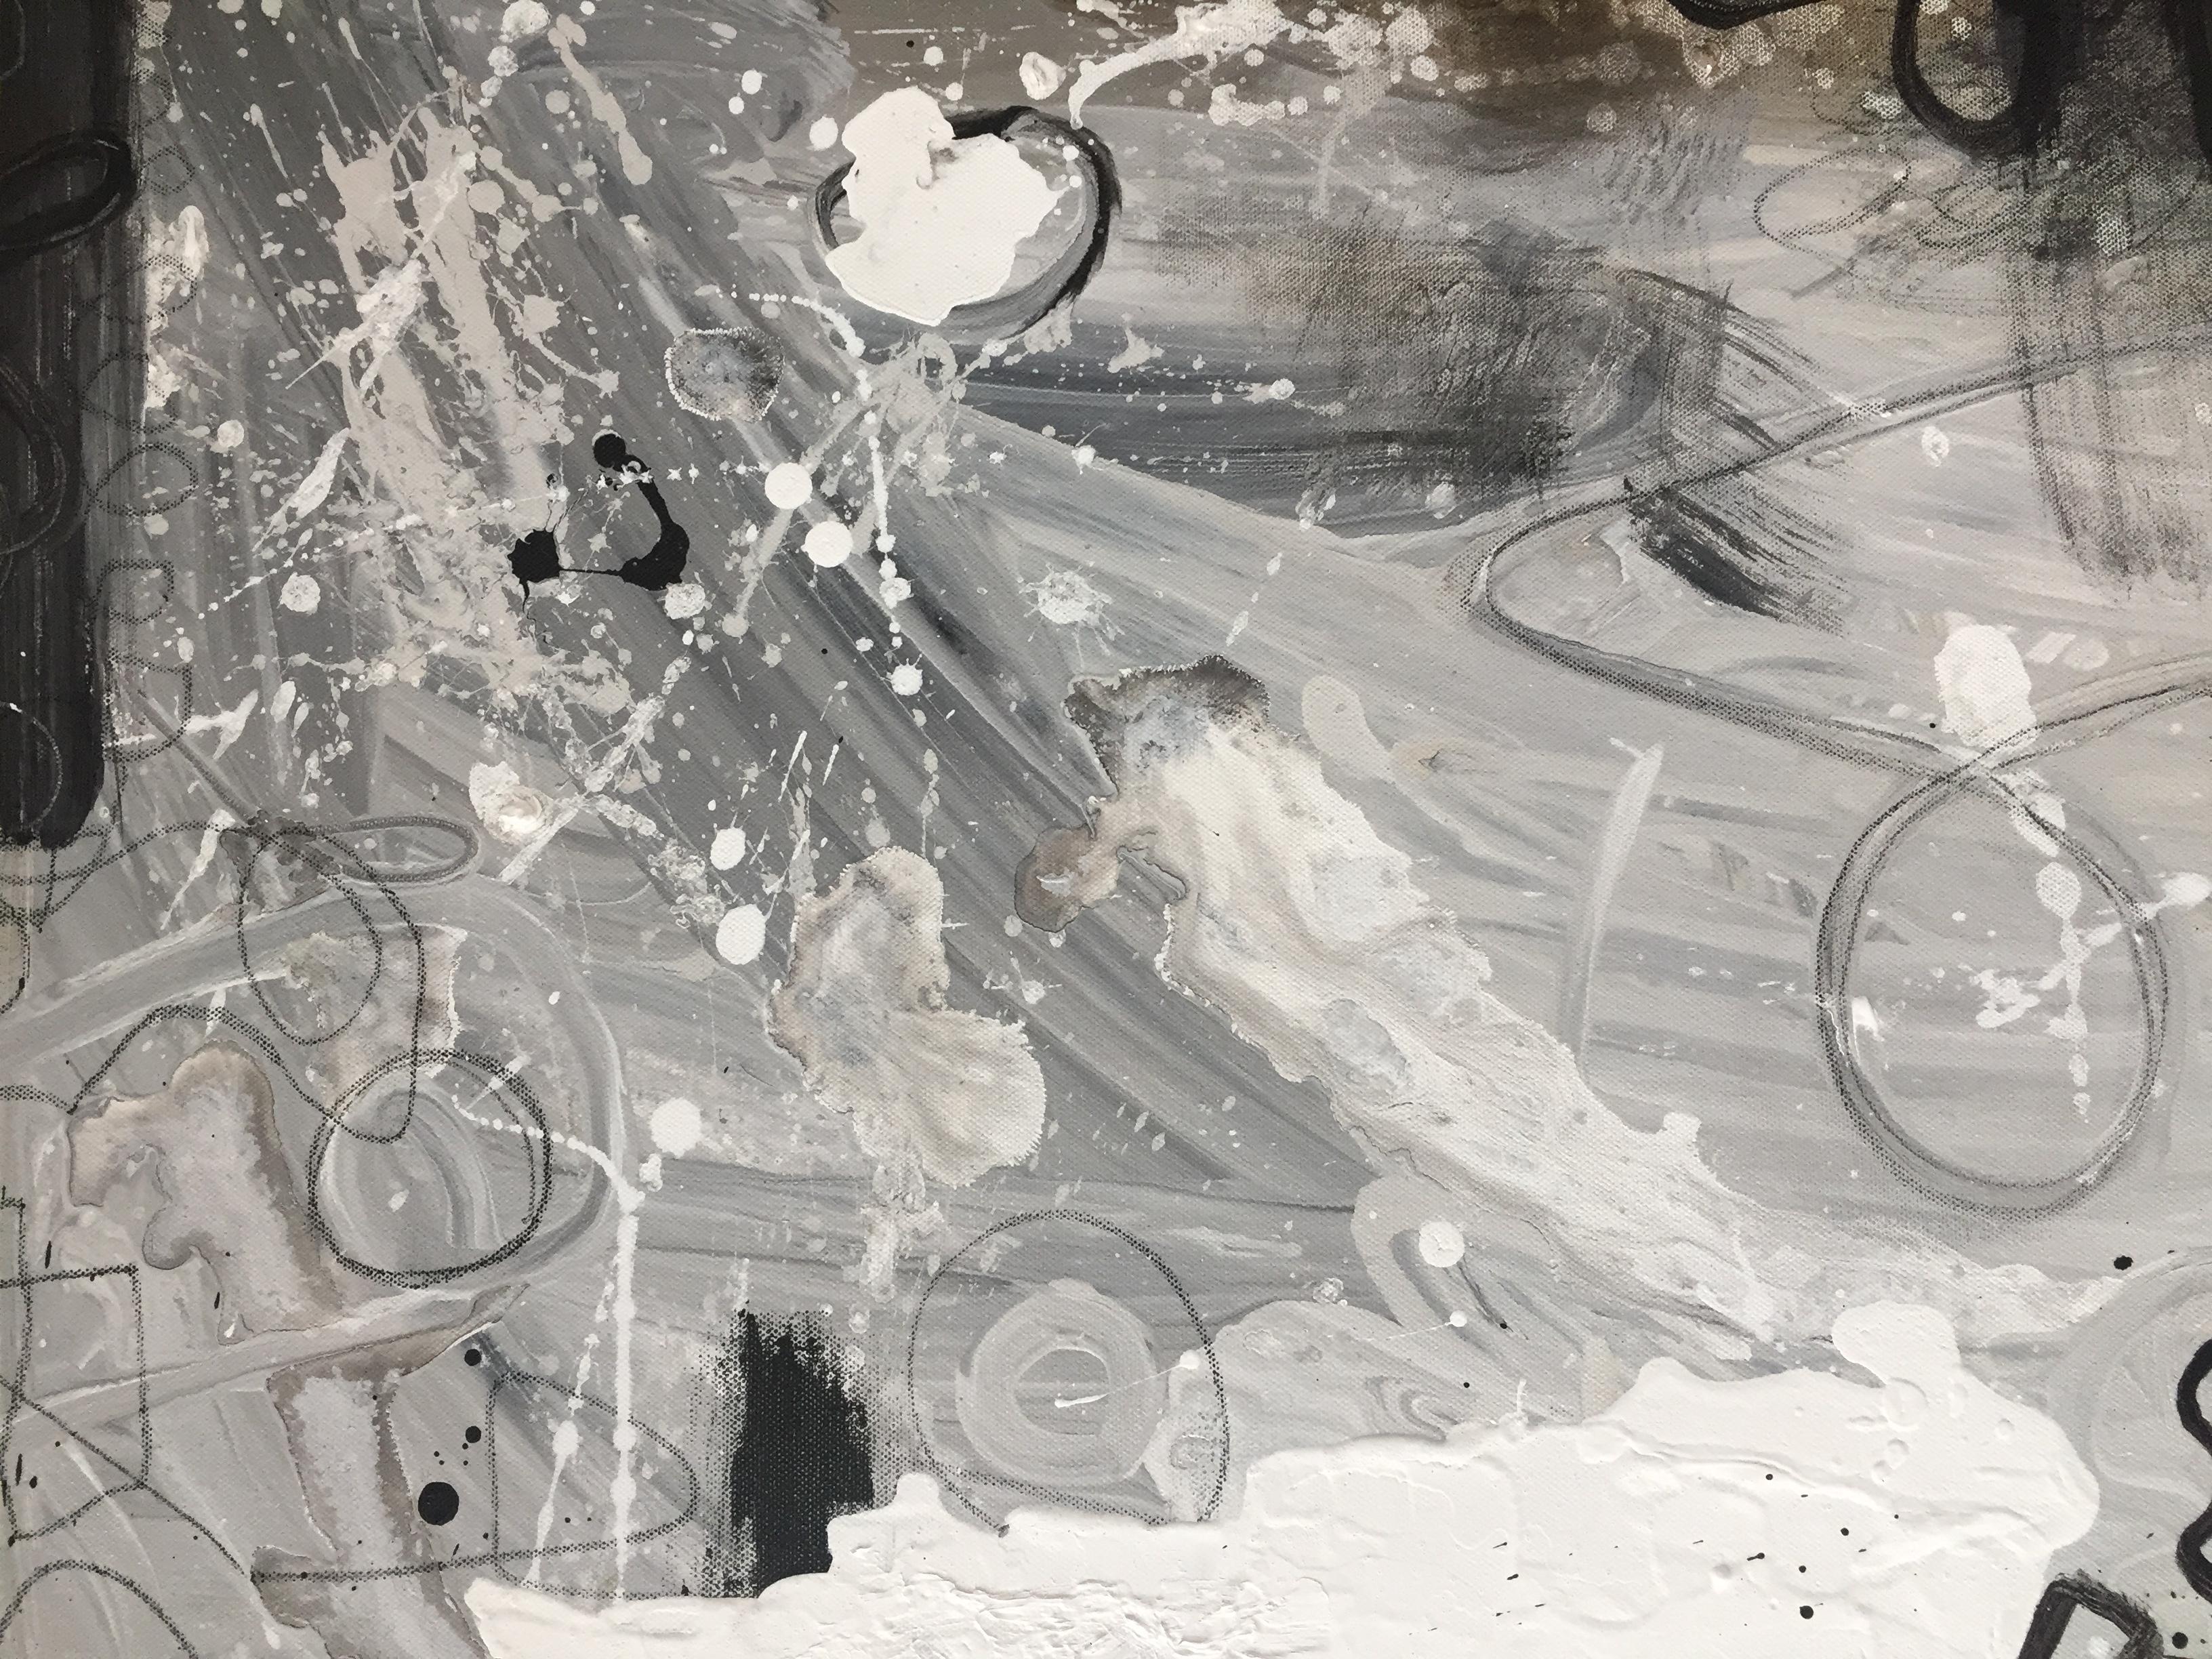 American Kennan Del Mar 'Abstract IX' Painting, Mixed Media on Canvas